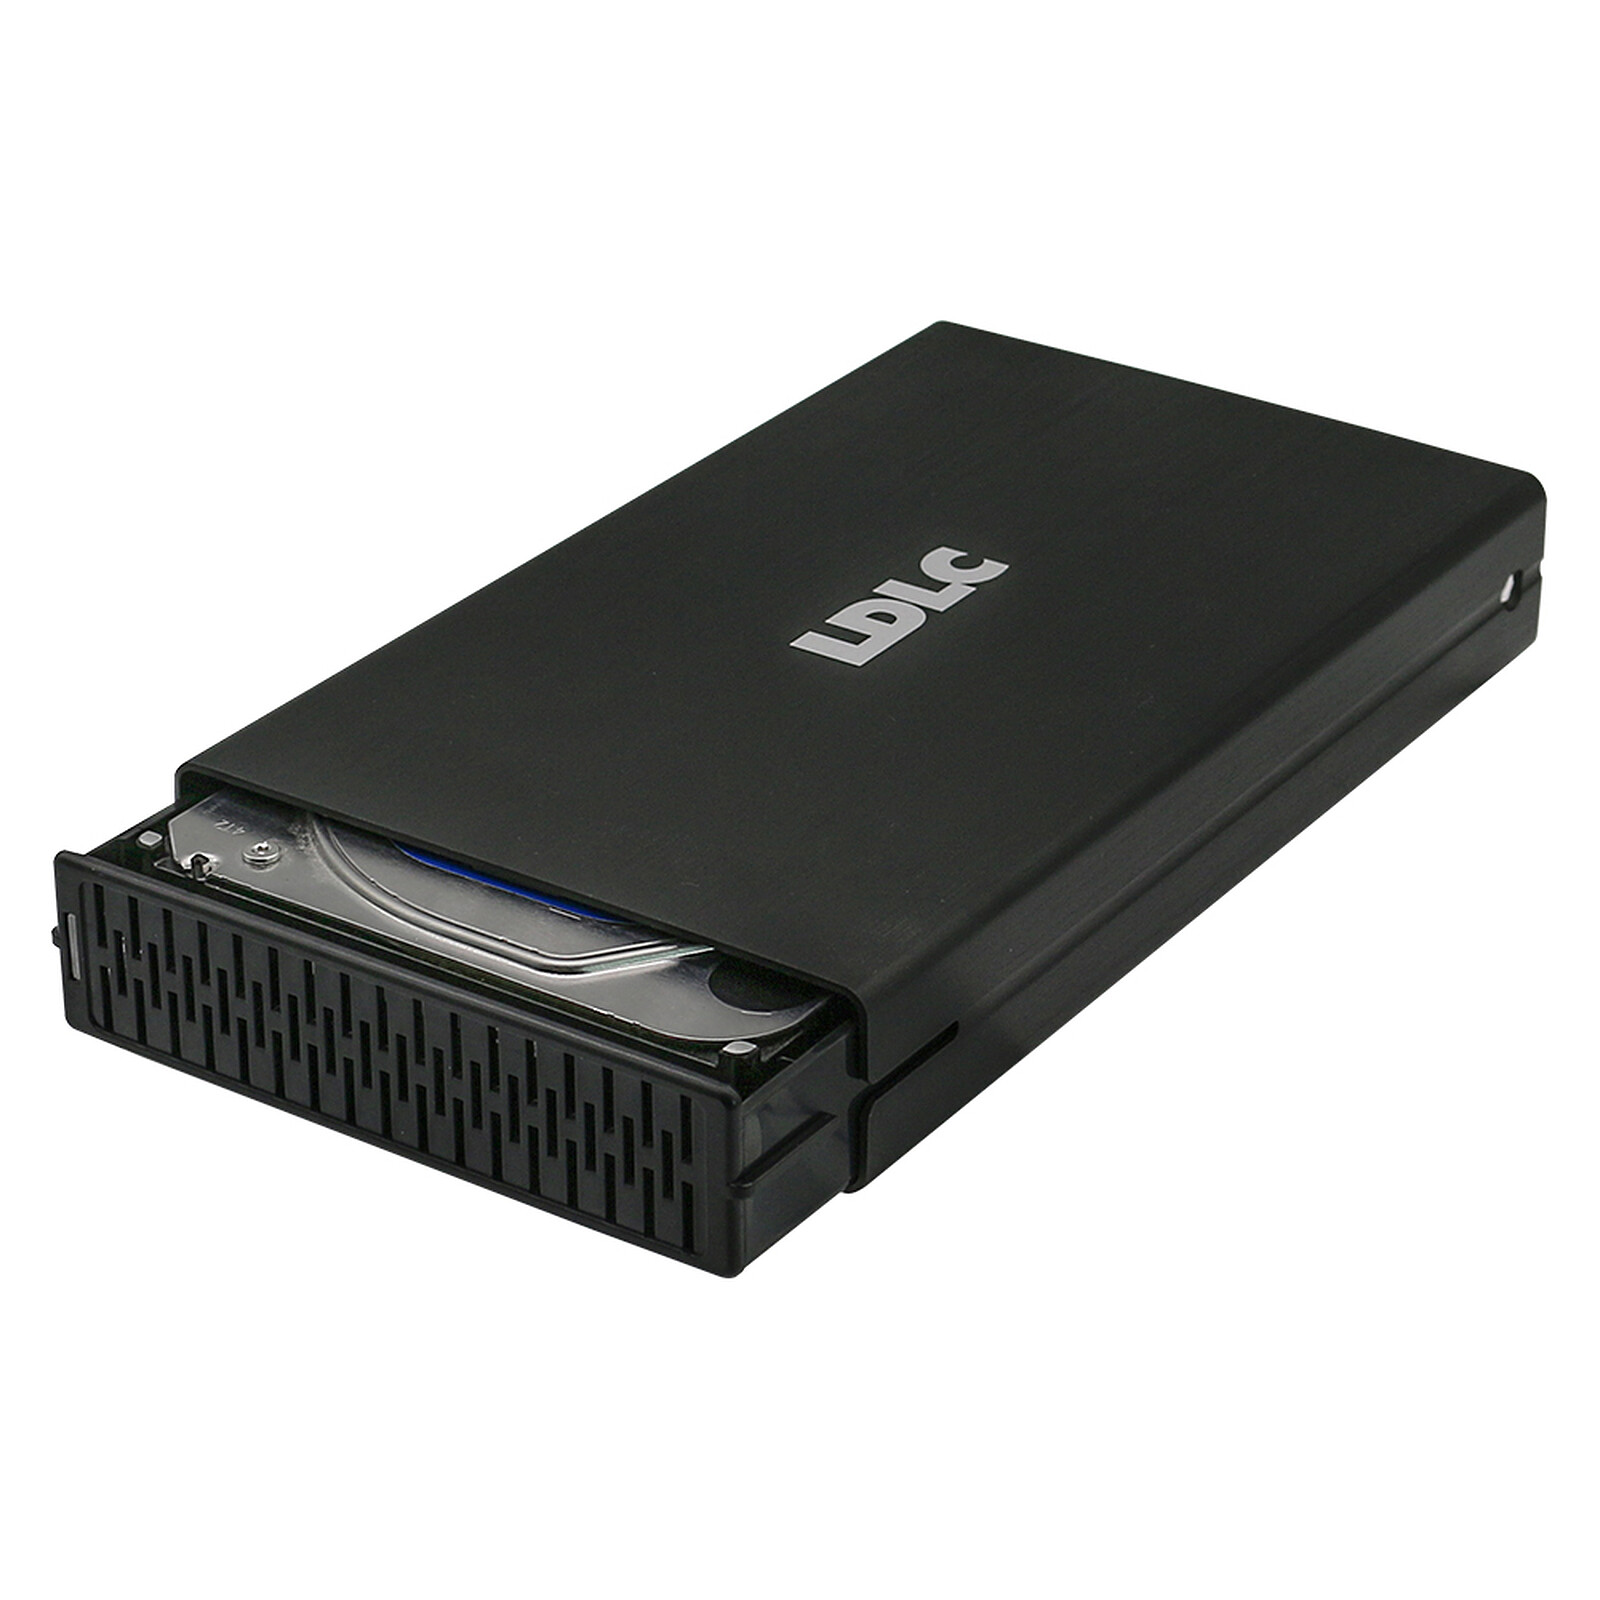 ICY BOX IB-3805-C31 - Boîtier disque dur - Garantie 3 ans LDLC